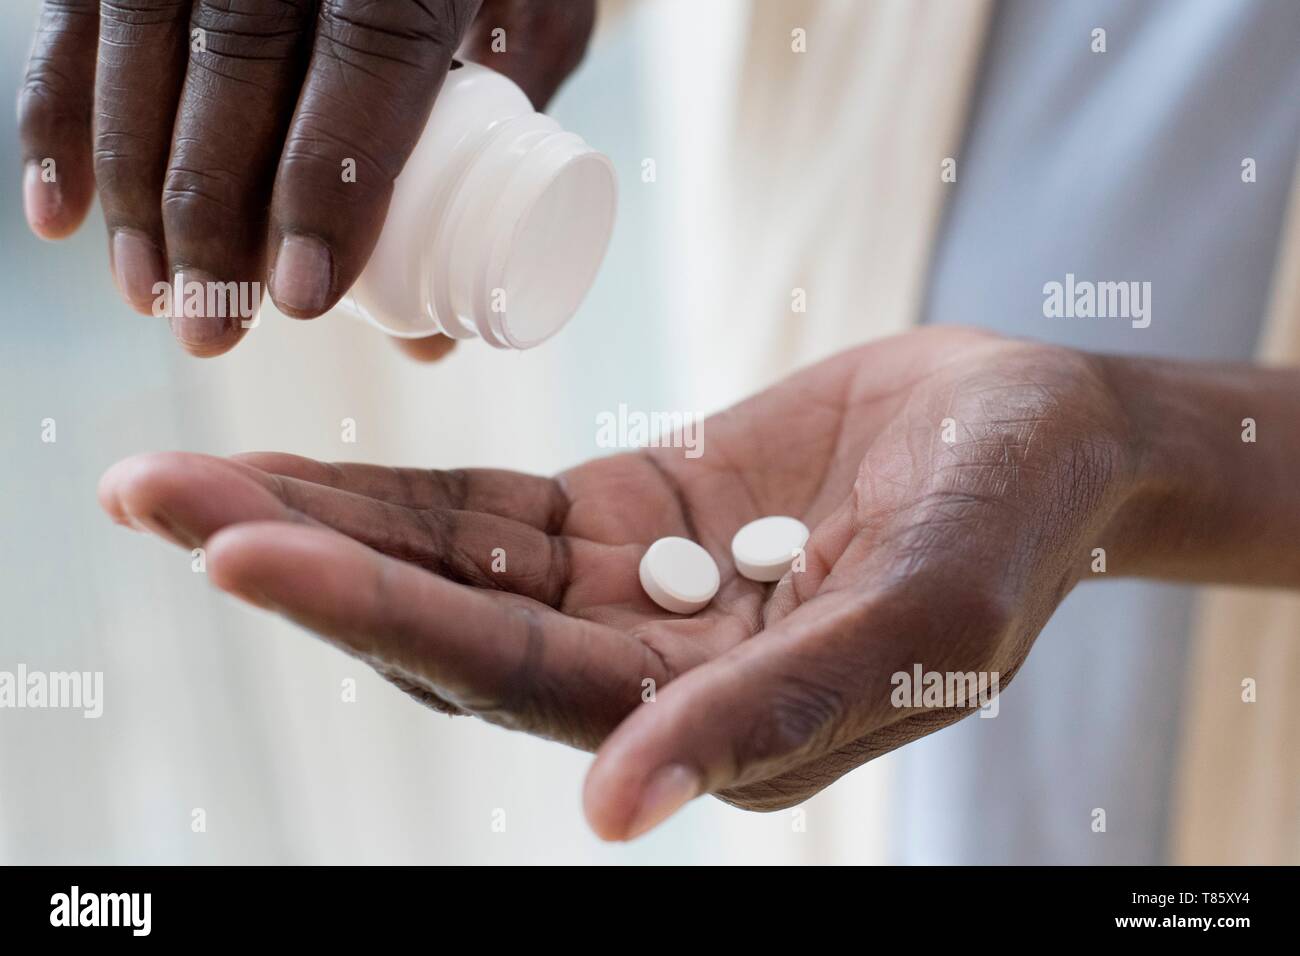 Woman pouring pills Stock Photo